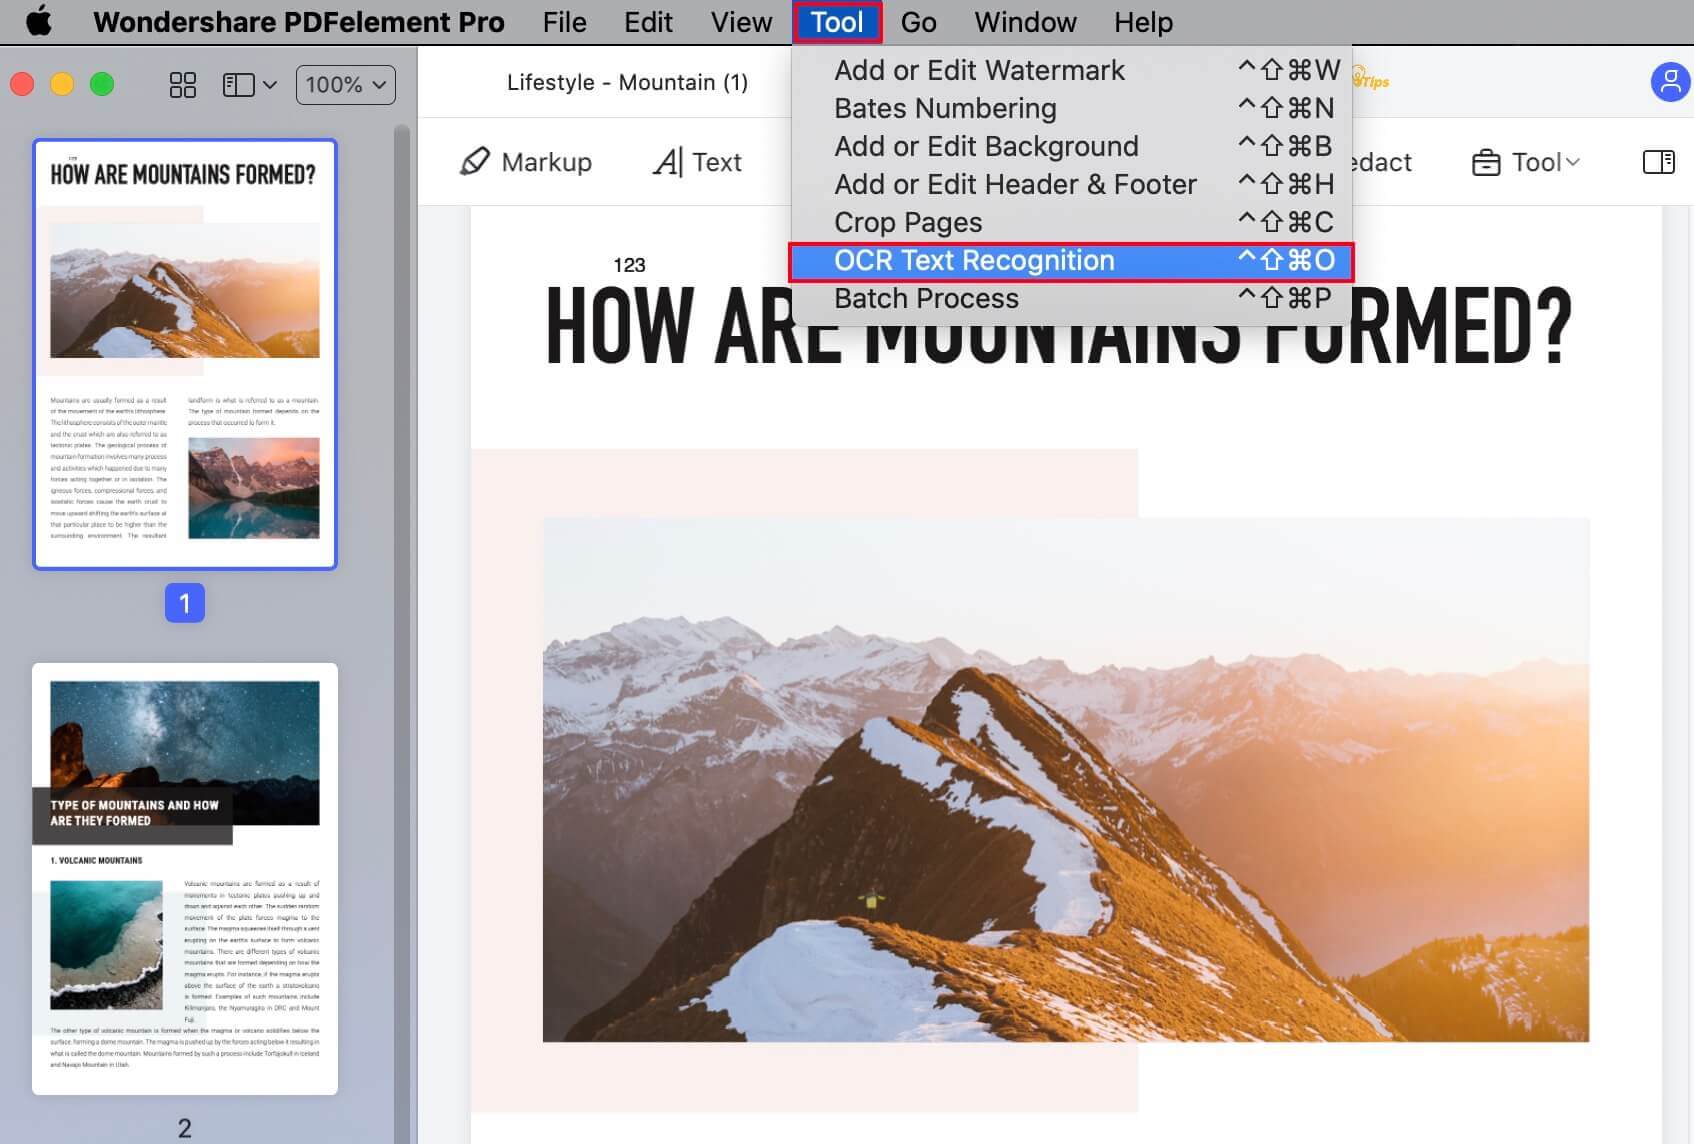 how to convert jpg to pdf on mac